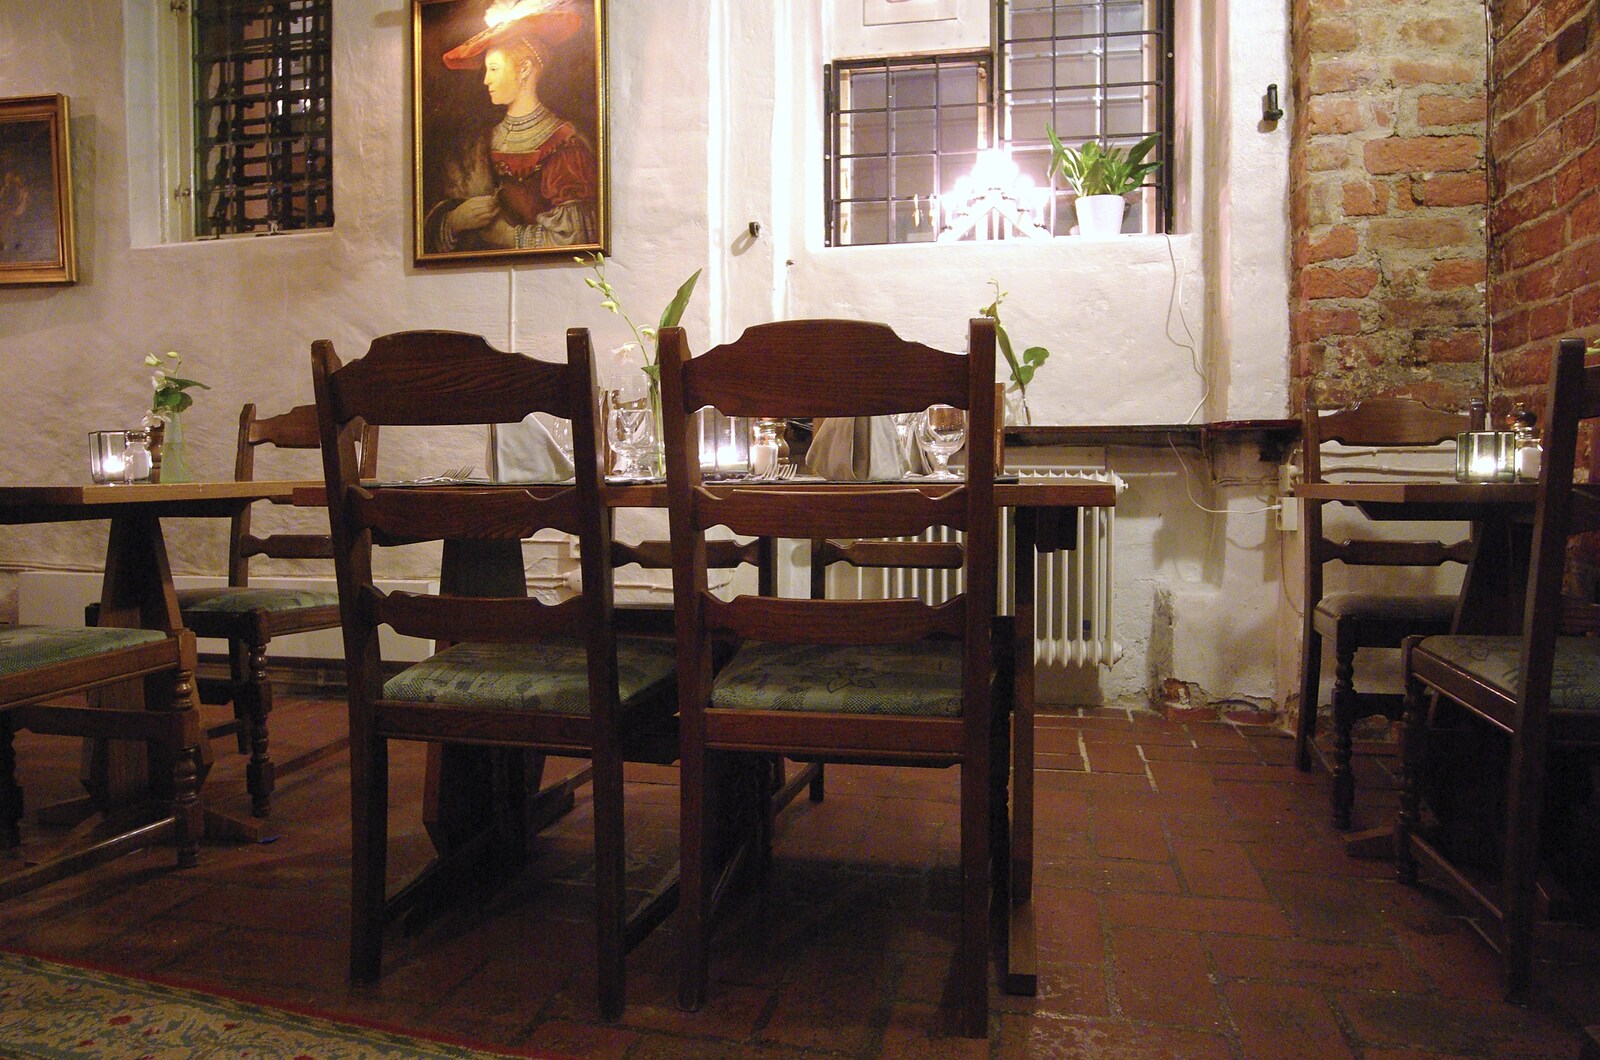 Restaurant chairs from Gamla Uppsala, Uppsala County, Sweden - 16th December 2007